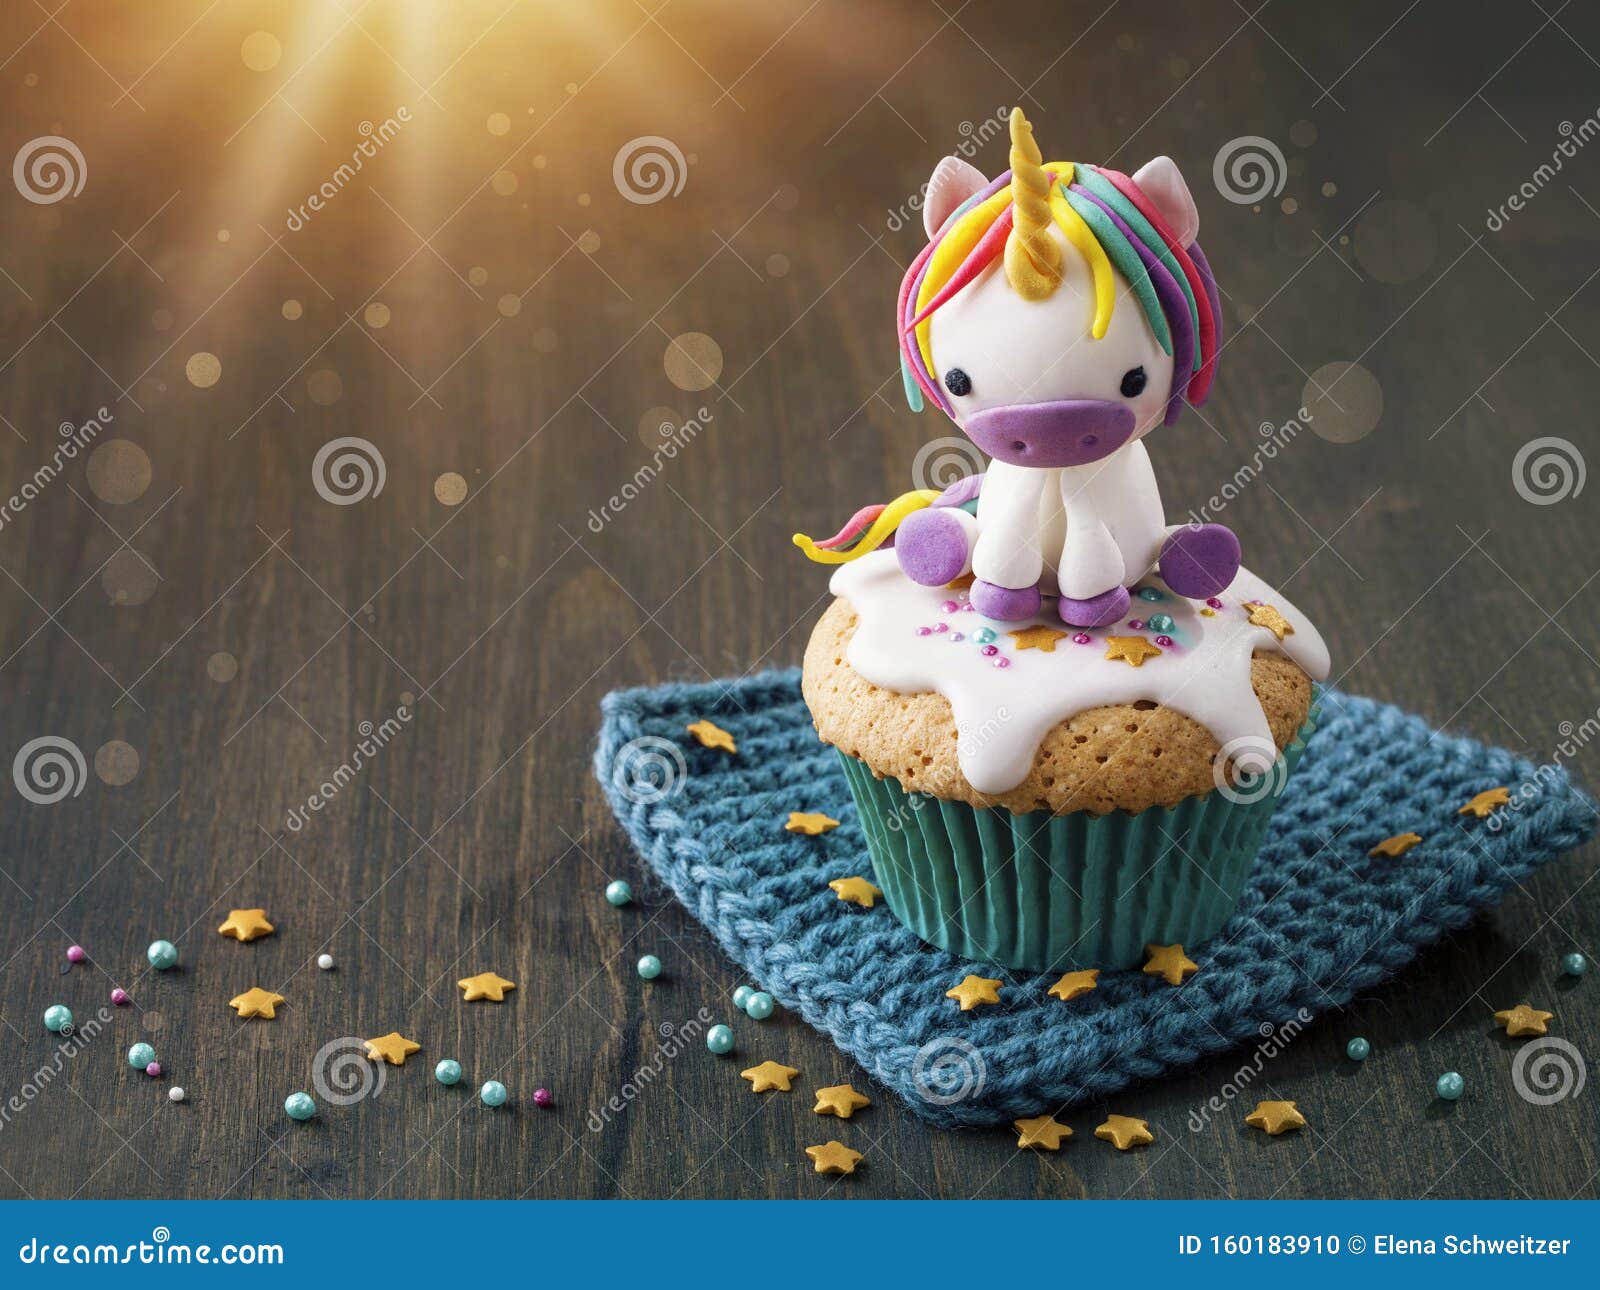 Unicorn themed cake (ball shape) 球形彩虹独角兽蛋糕 - Cube Bakery & Cafe